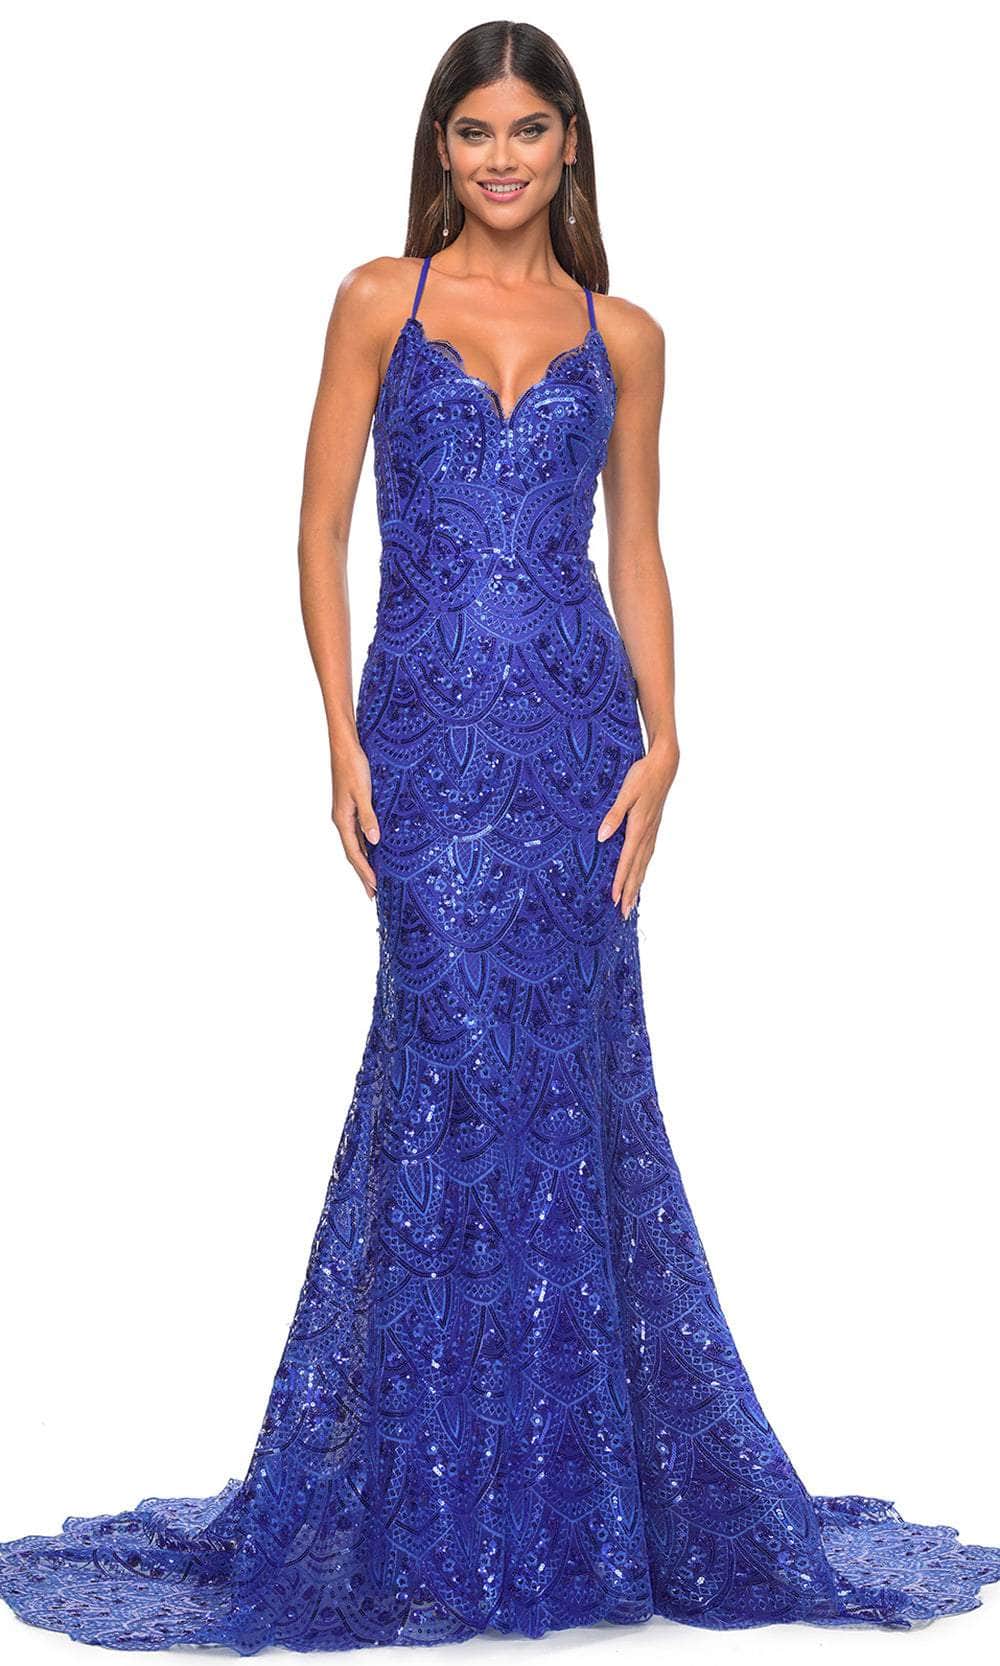 La Femme 31865 - Sequin Design Prom Dress Special Occasion Dress 00 / Royal Blue